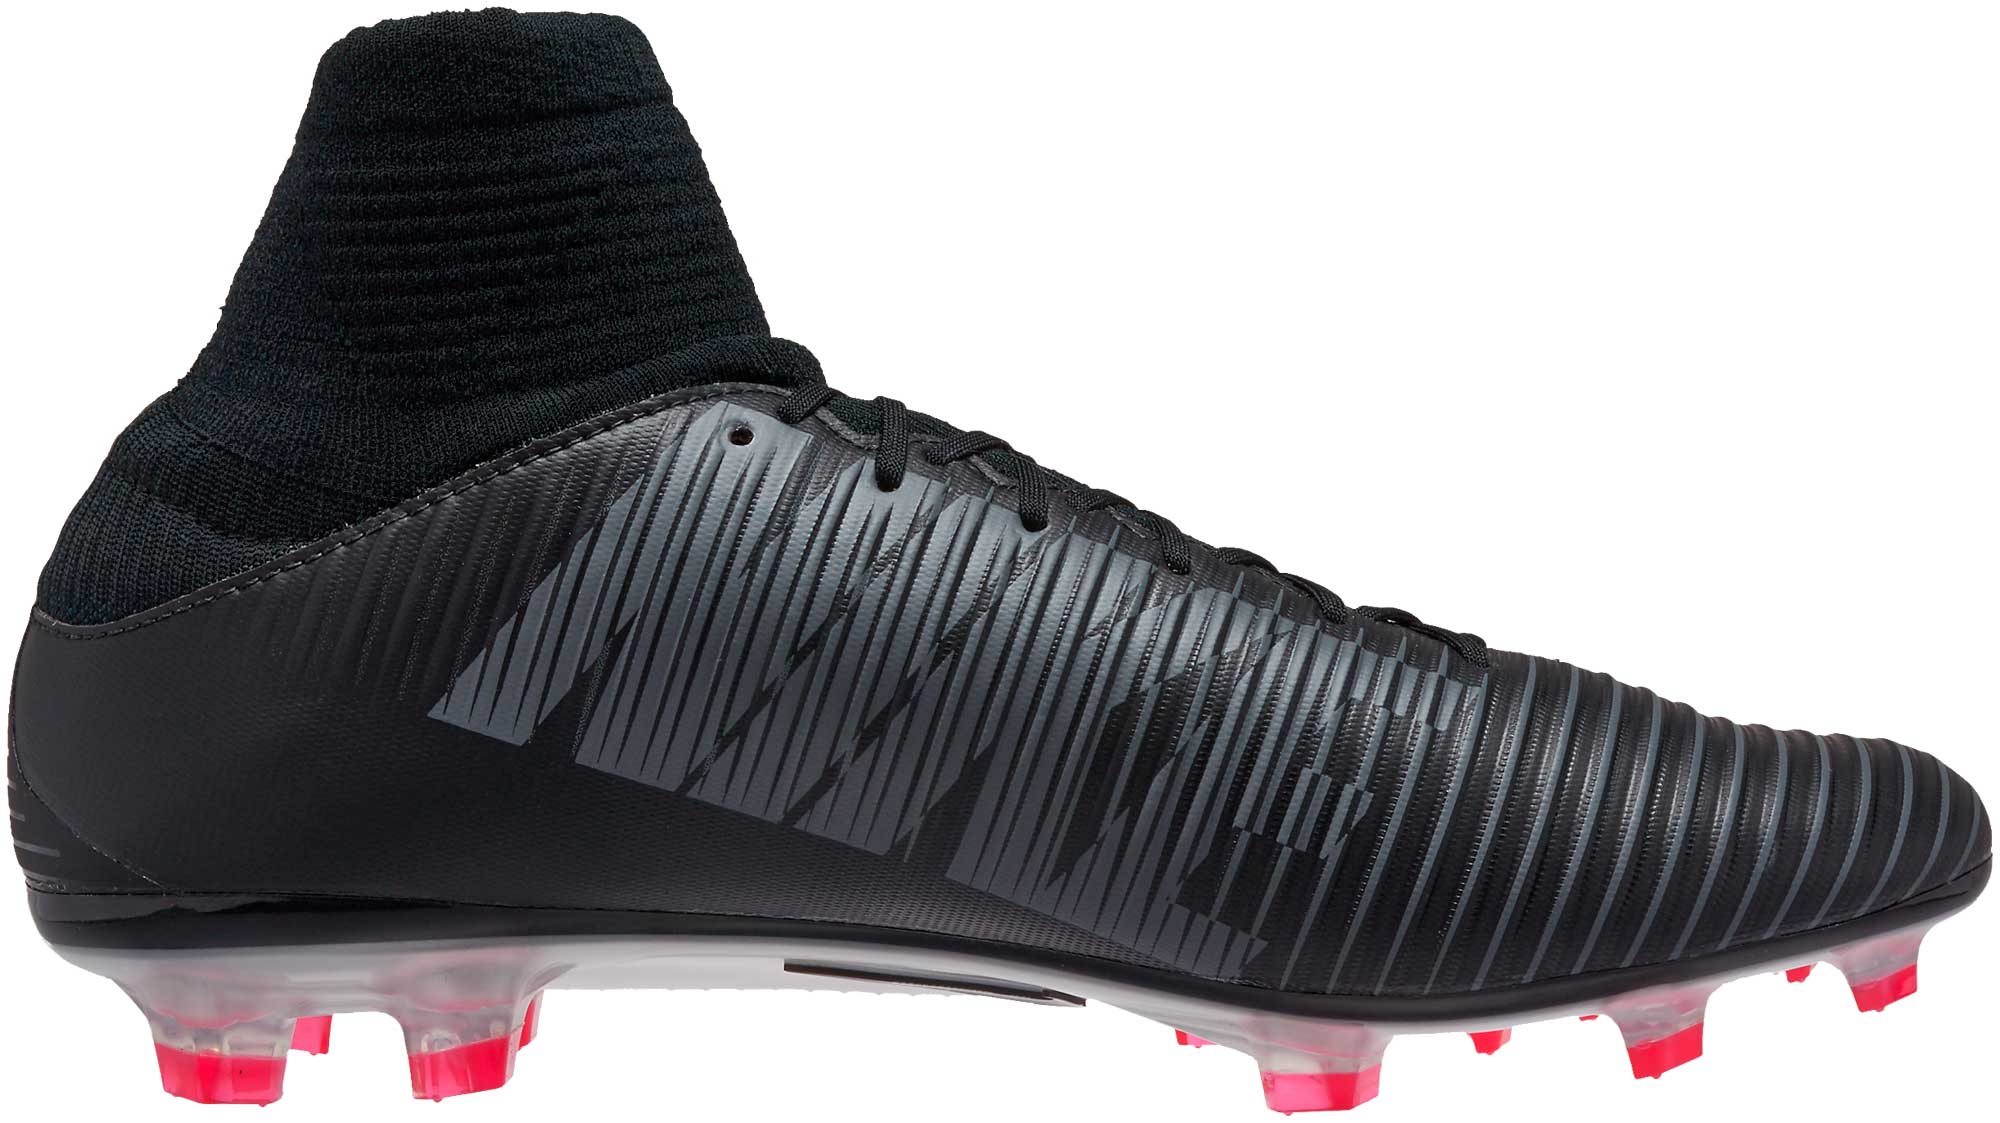 Nike Mercurial Veloce III DF FG Soccer Cleats - Black & White Soccer Master